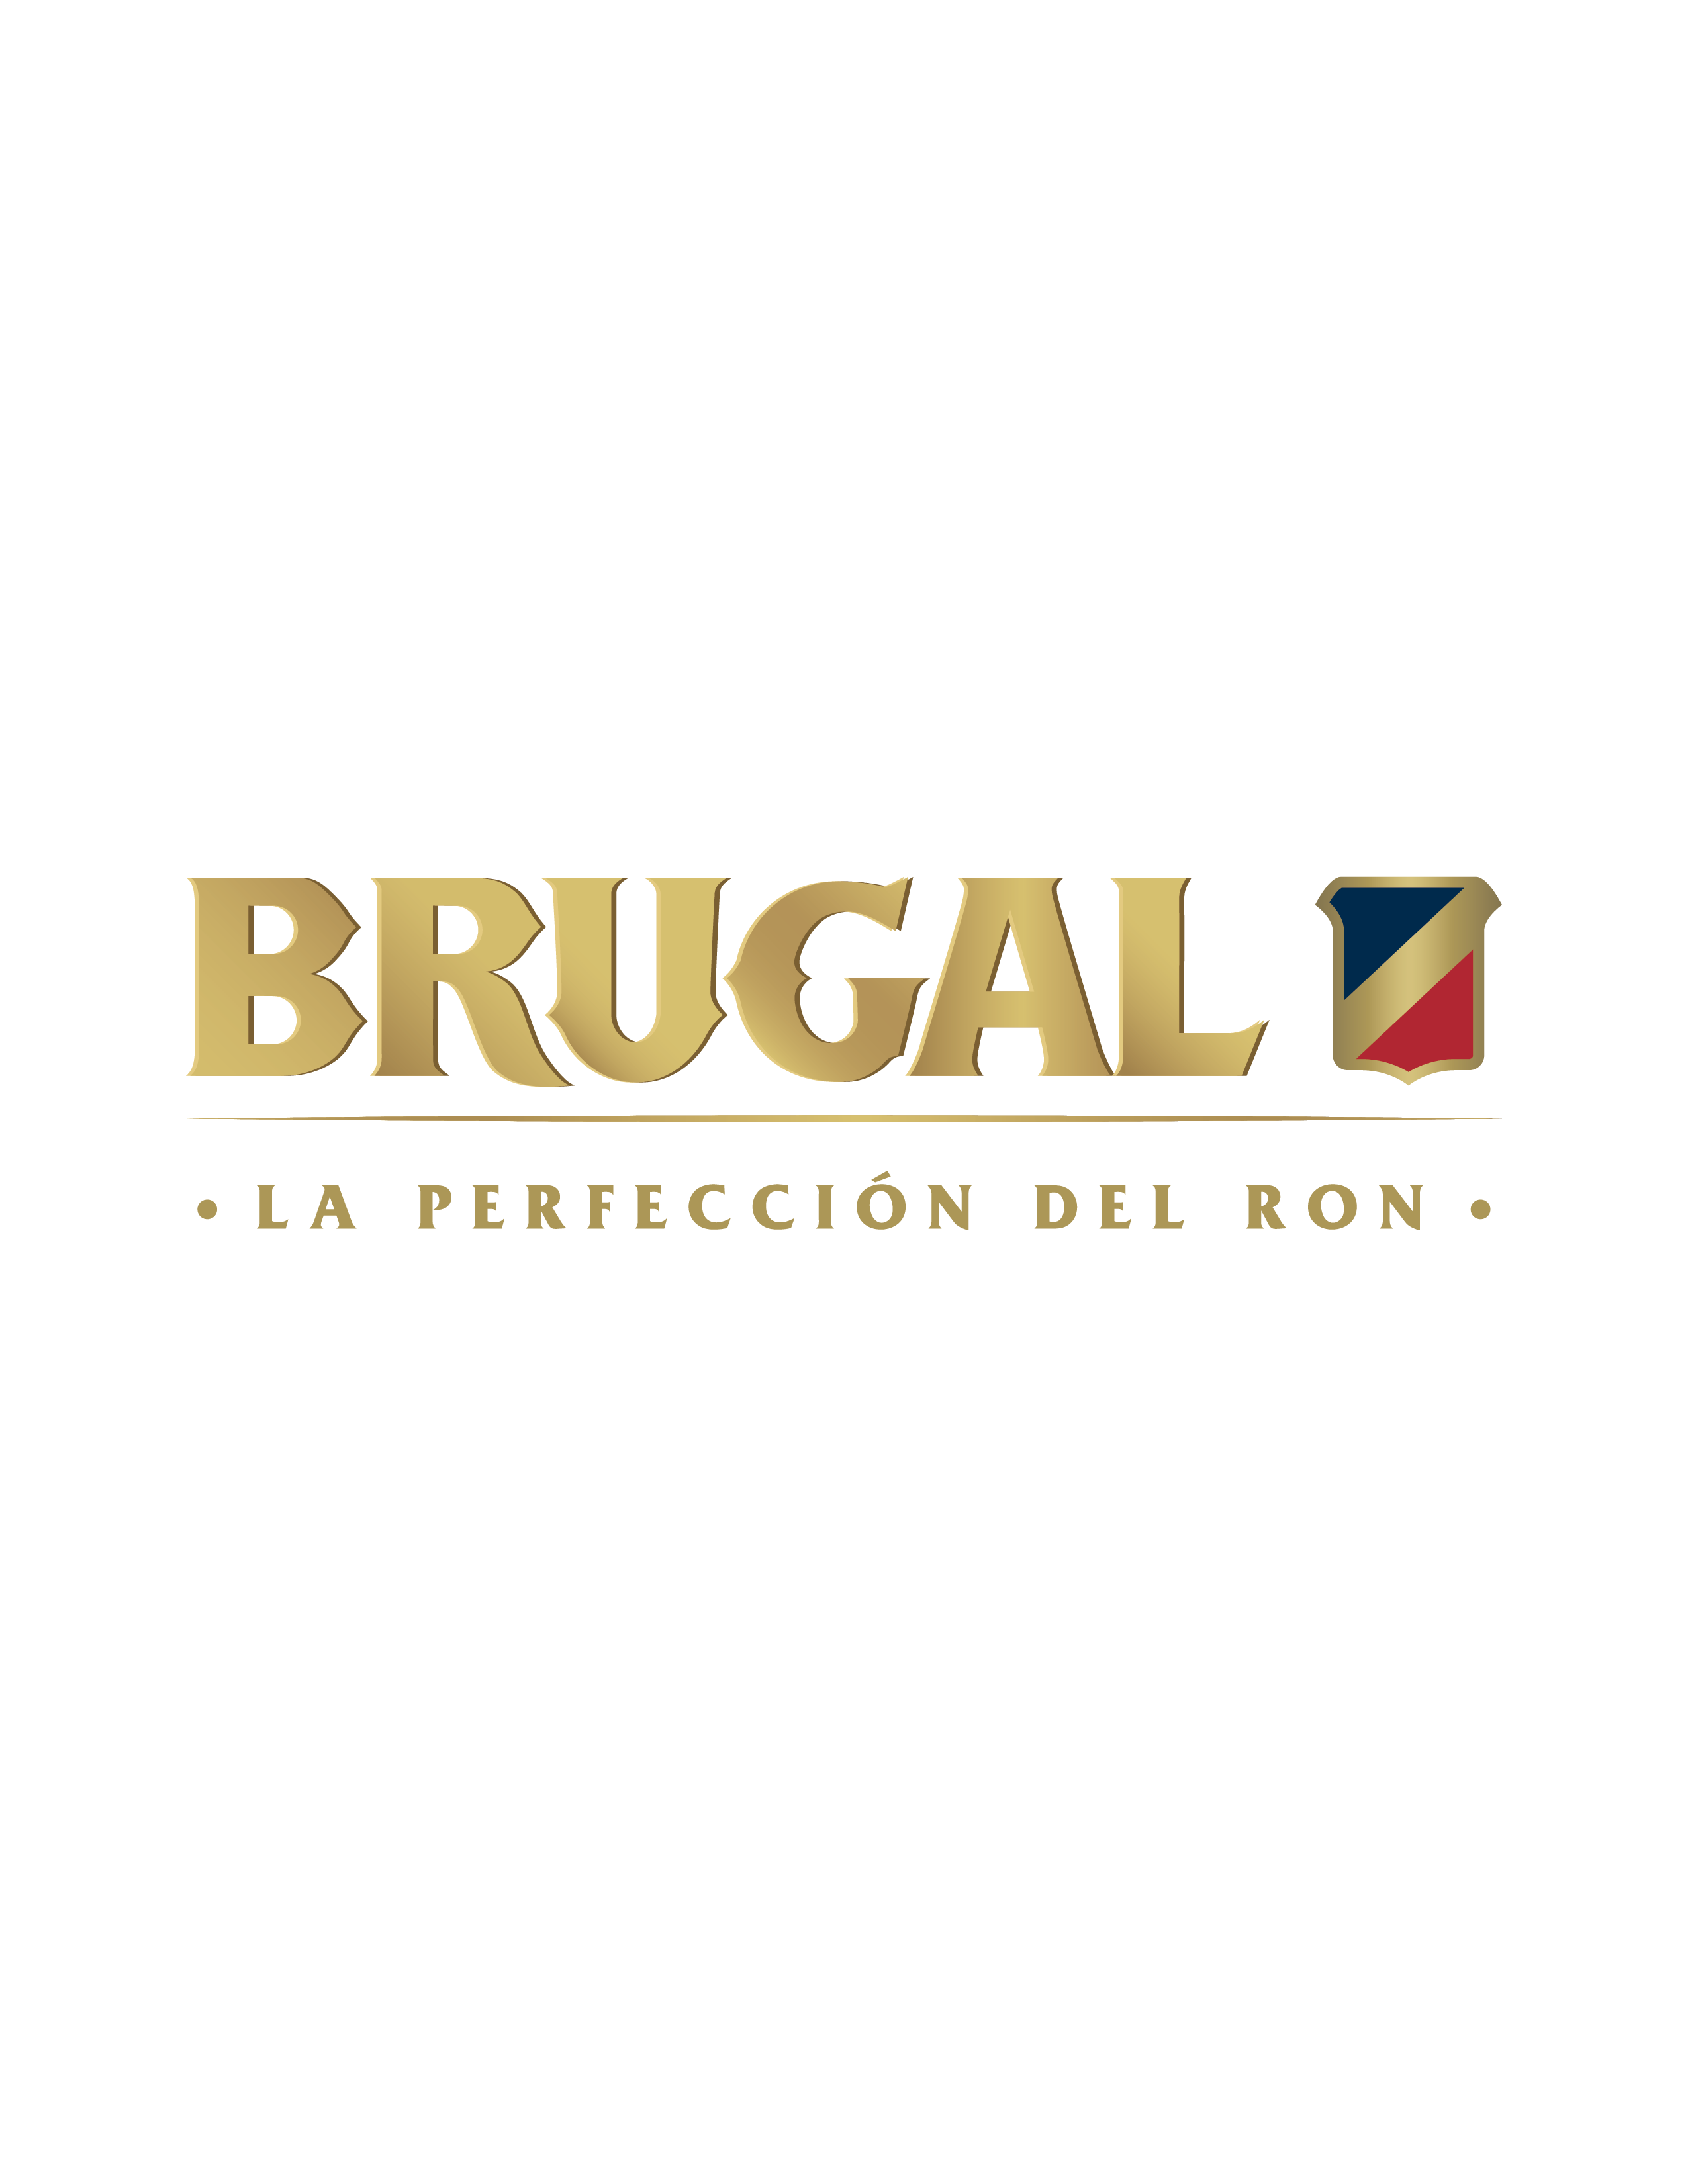 Brugal Logo